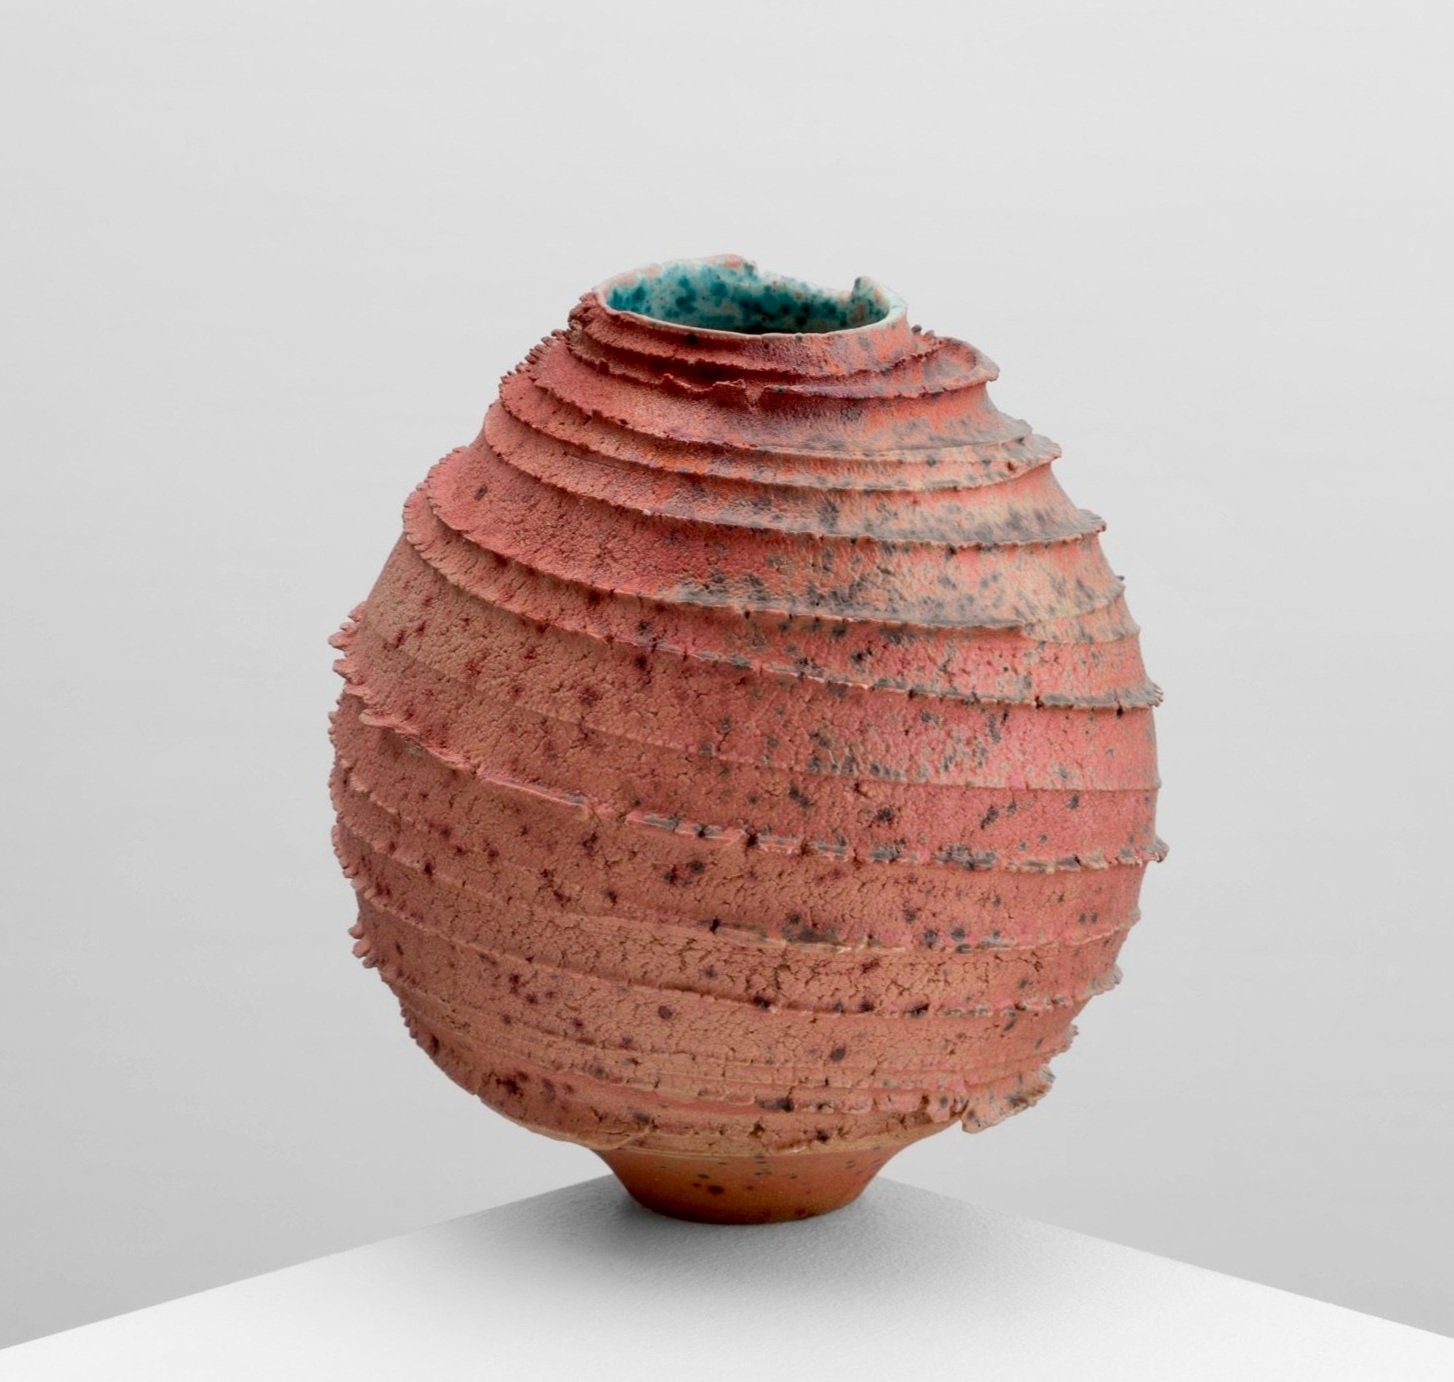 John+Daly%2C+Vase+Form.jpg